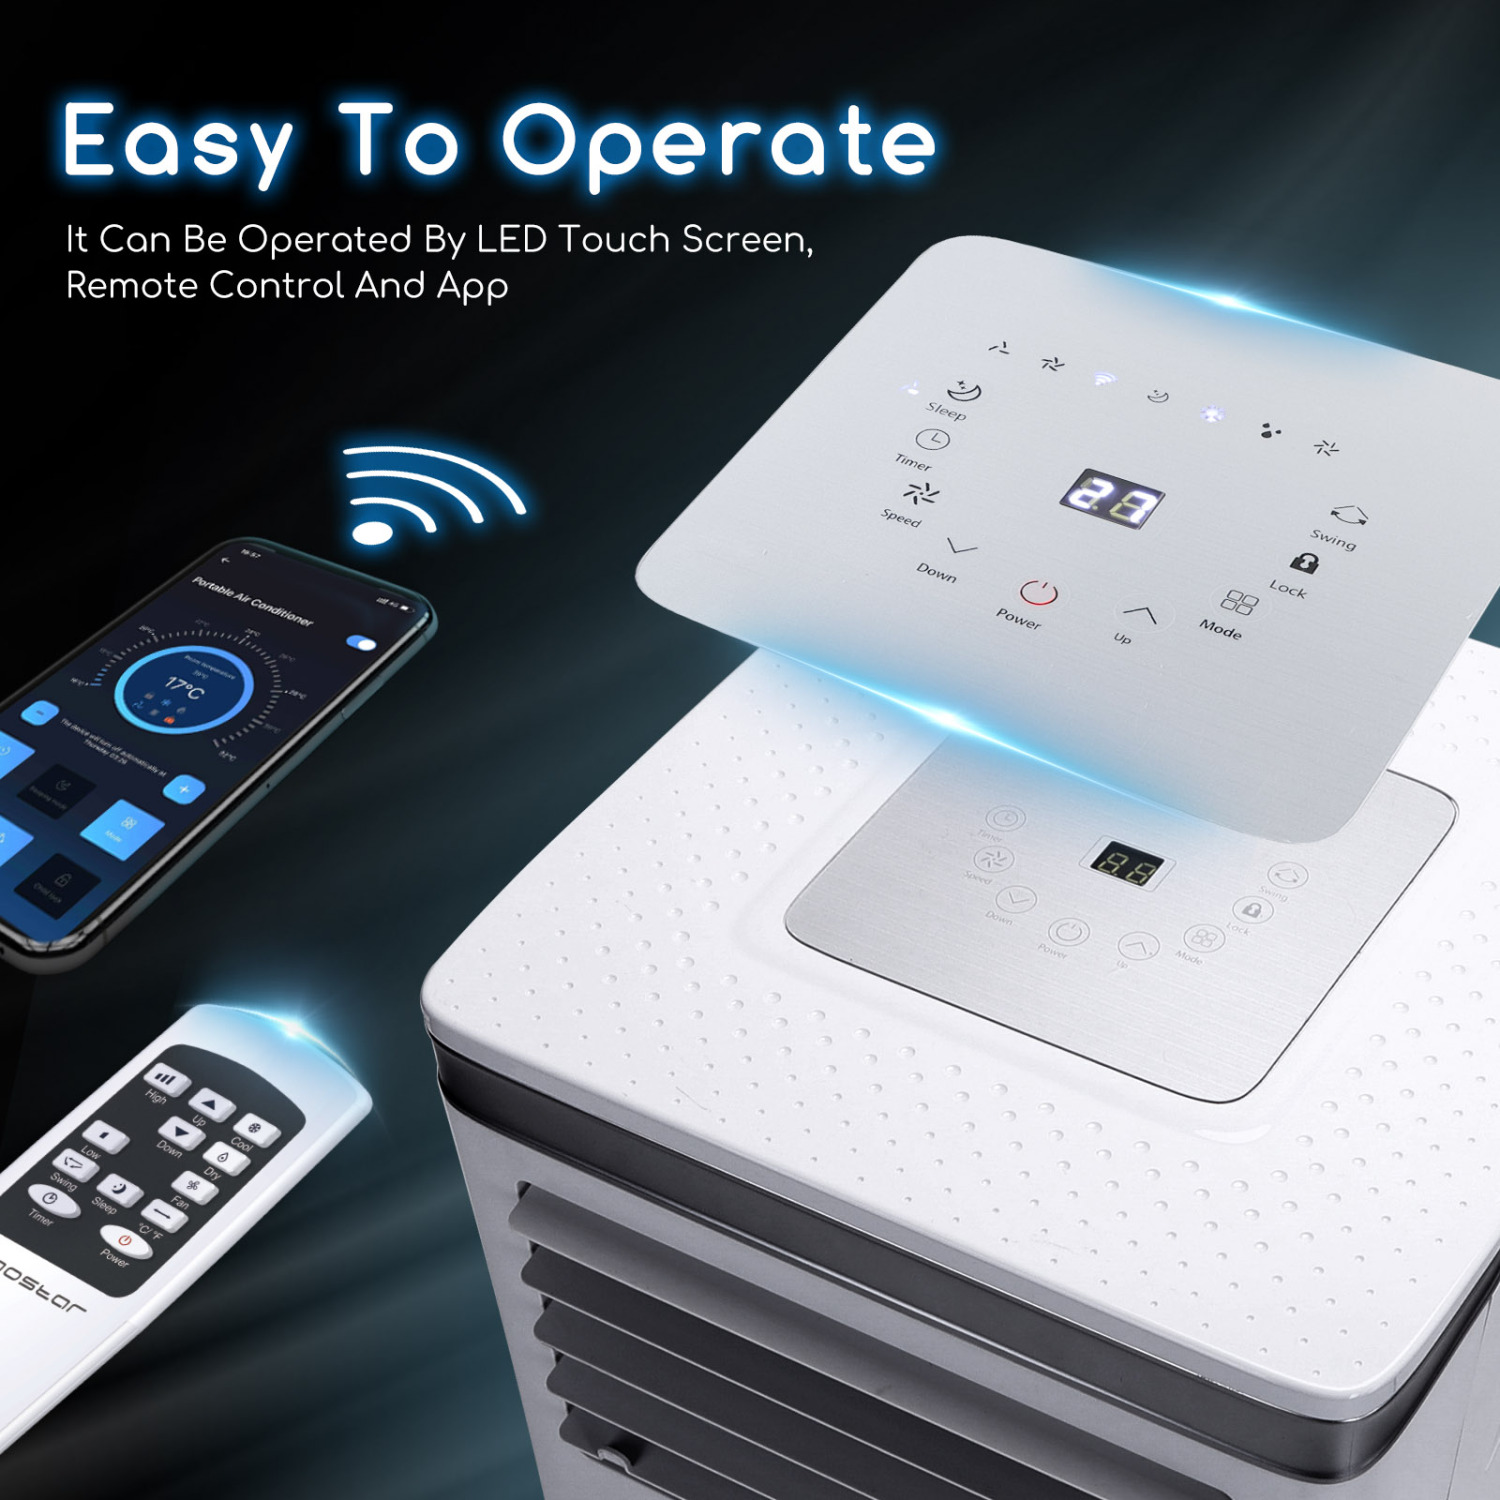 Aigostar Freeze Smart 33TUU - Mobiele airco - Airconditioning met Wifi en App - 9000 BTU - 3-in-1 - Wit